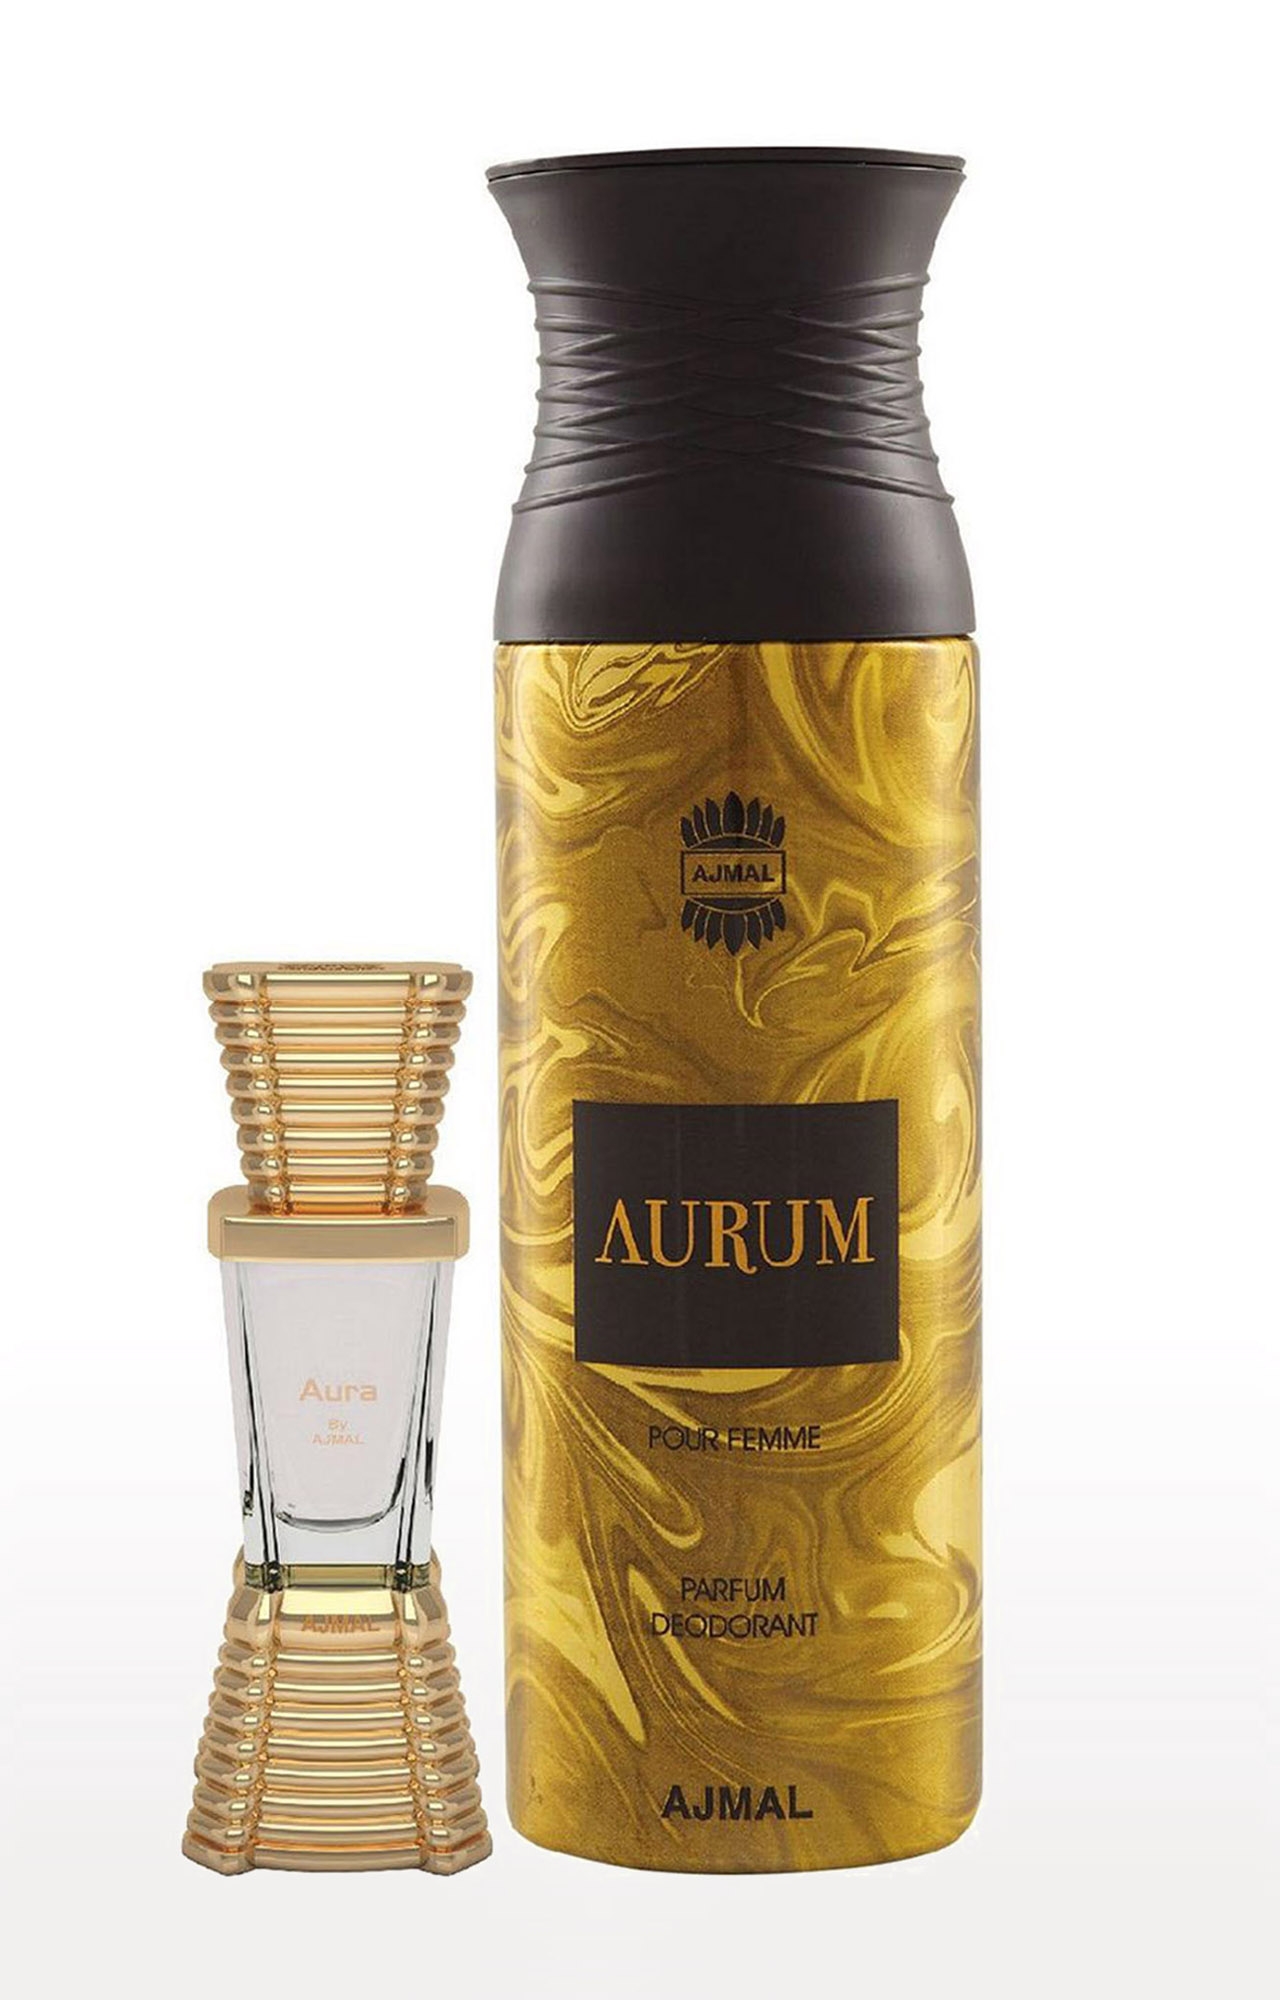 Ajmal | Ajmal Aura Concentrated Perfume Oil Fruity Alcohol-free Attar 10ml for Unisex and Aurum Femme Deodorant Fruity Fragrance 200ml for Women